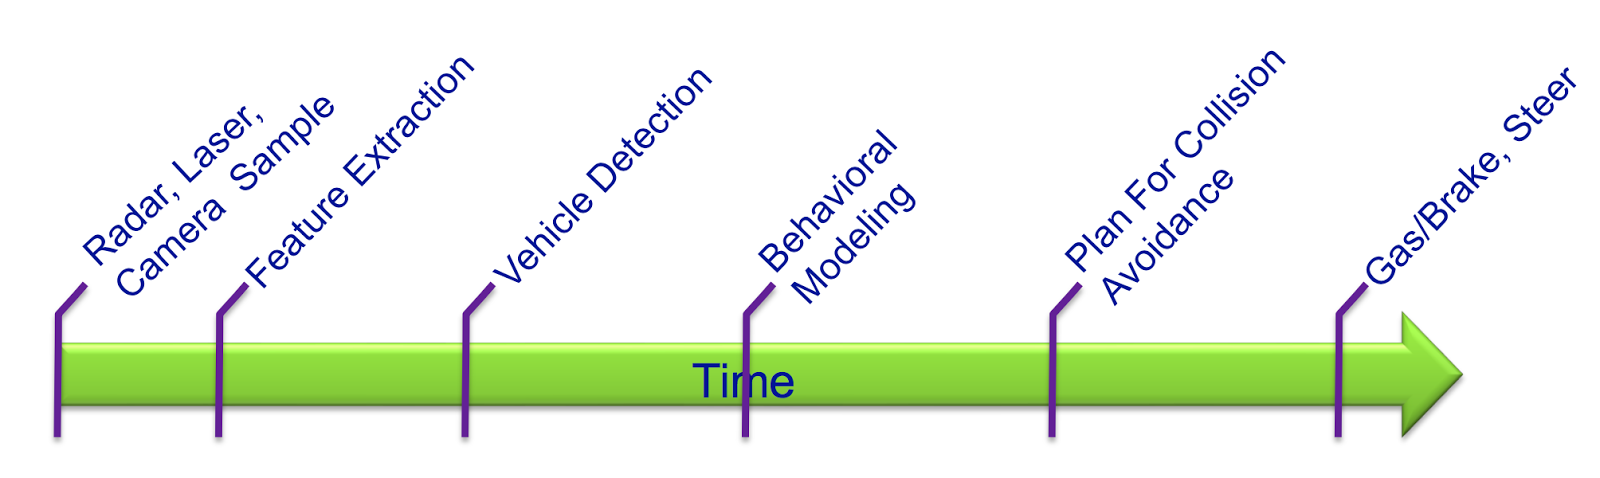 time diagram